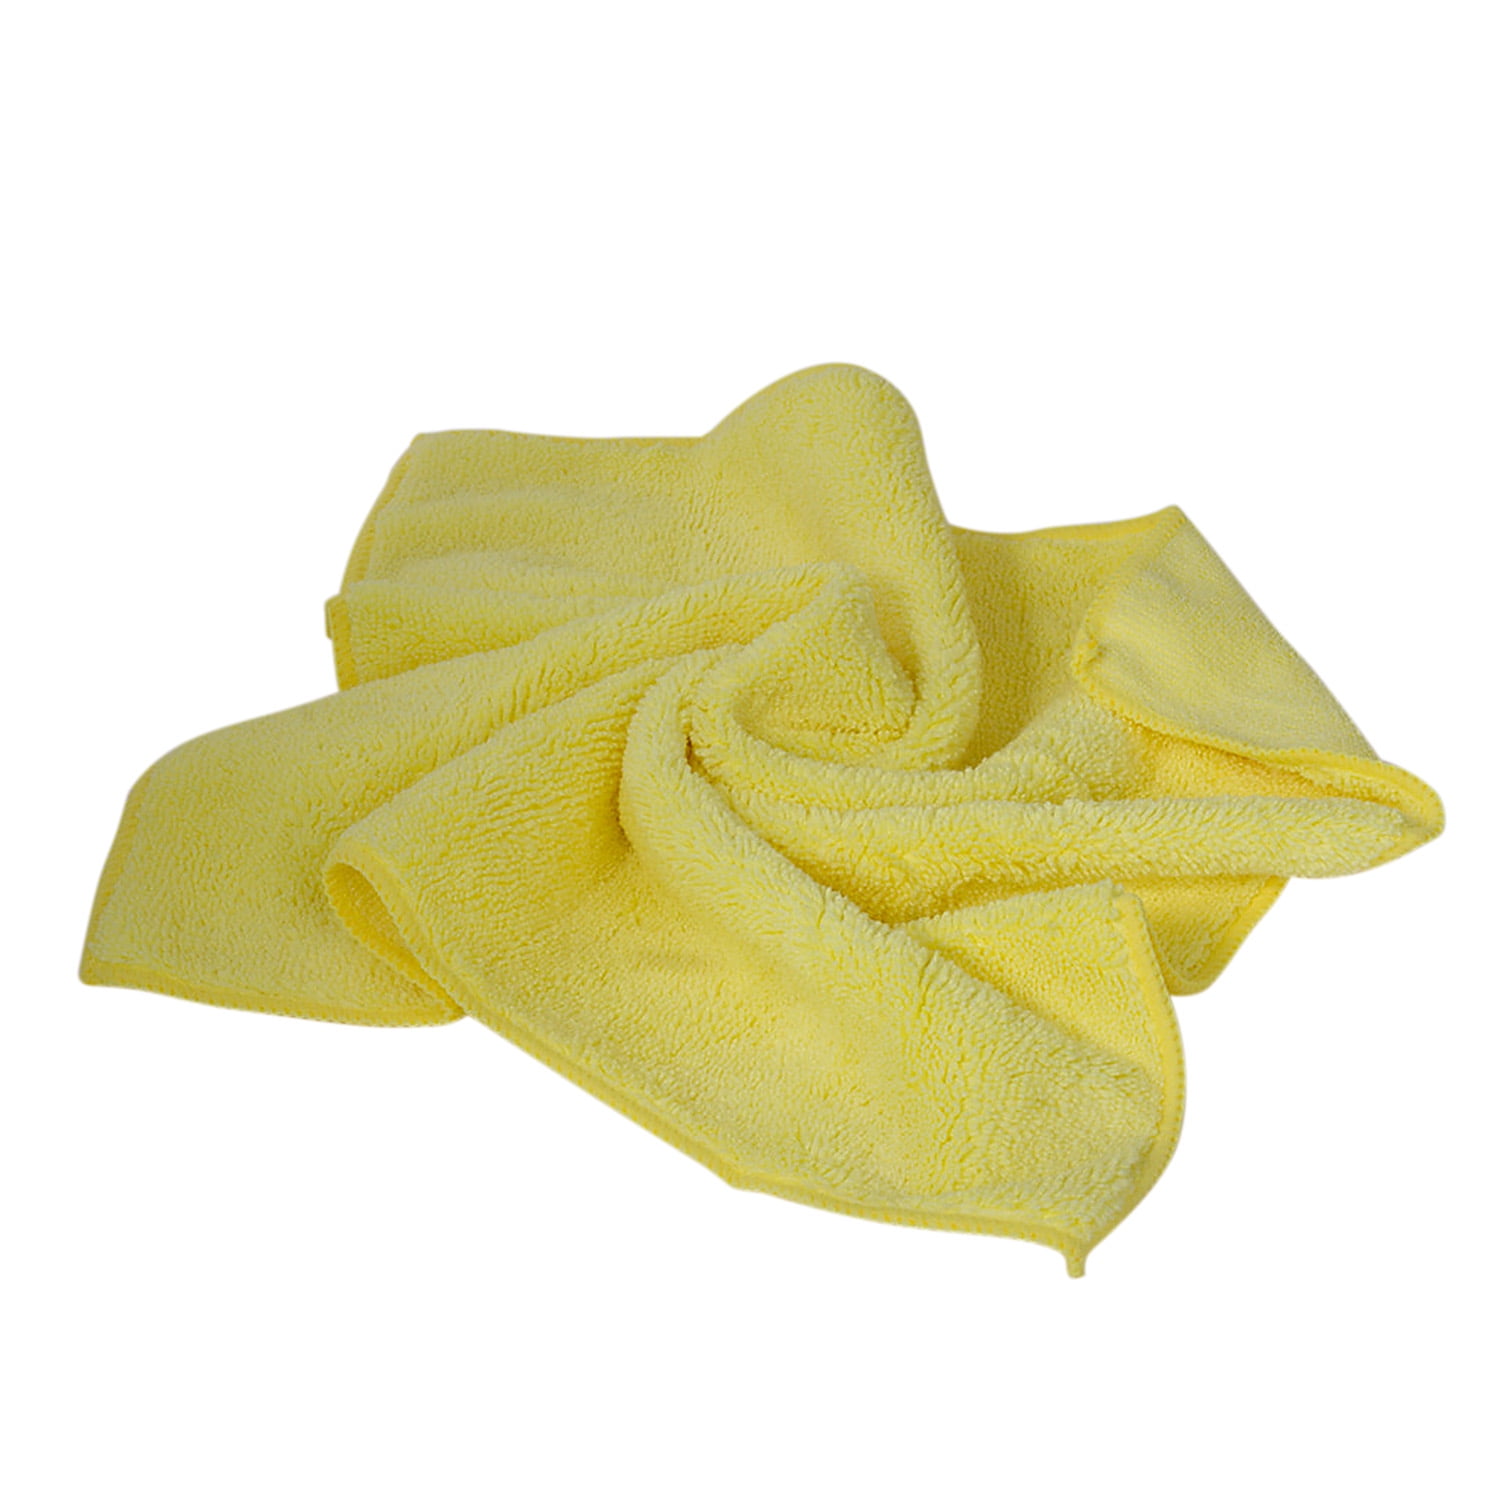 2 Pcs Large Microfiber Cleaning Cloth Wash Towel Drying Rag Car Polishing Tools 